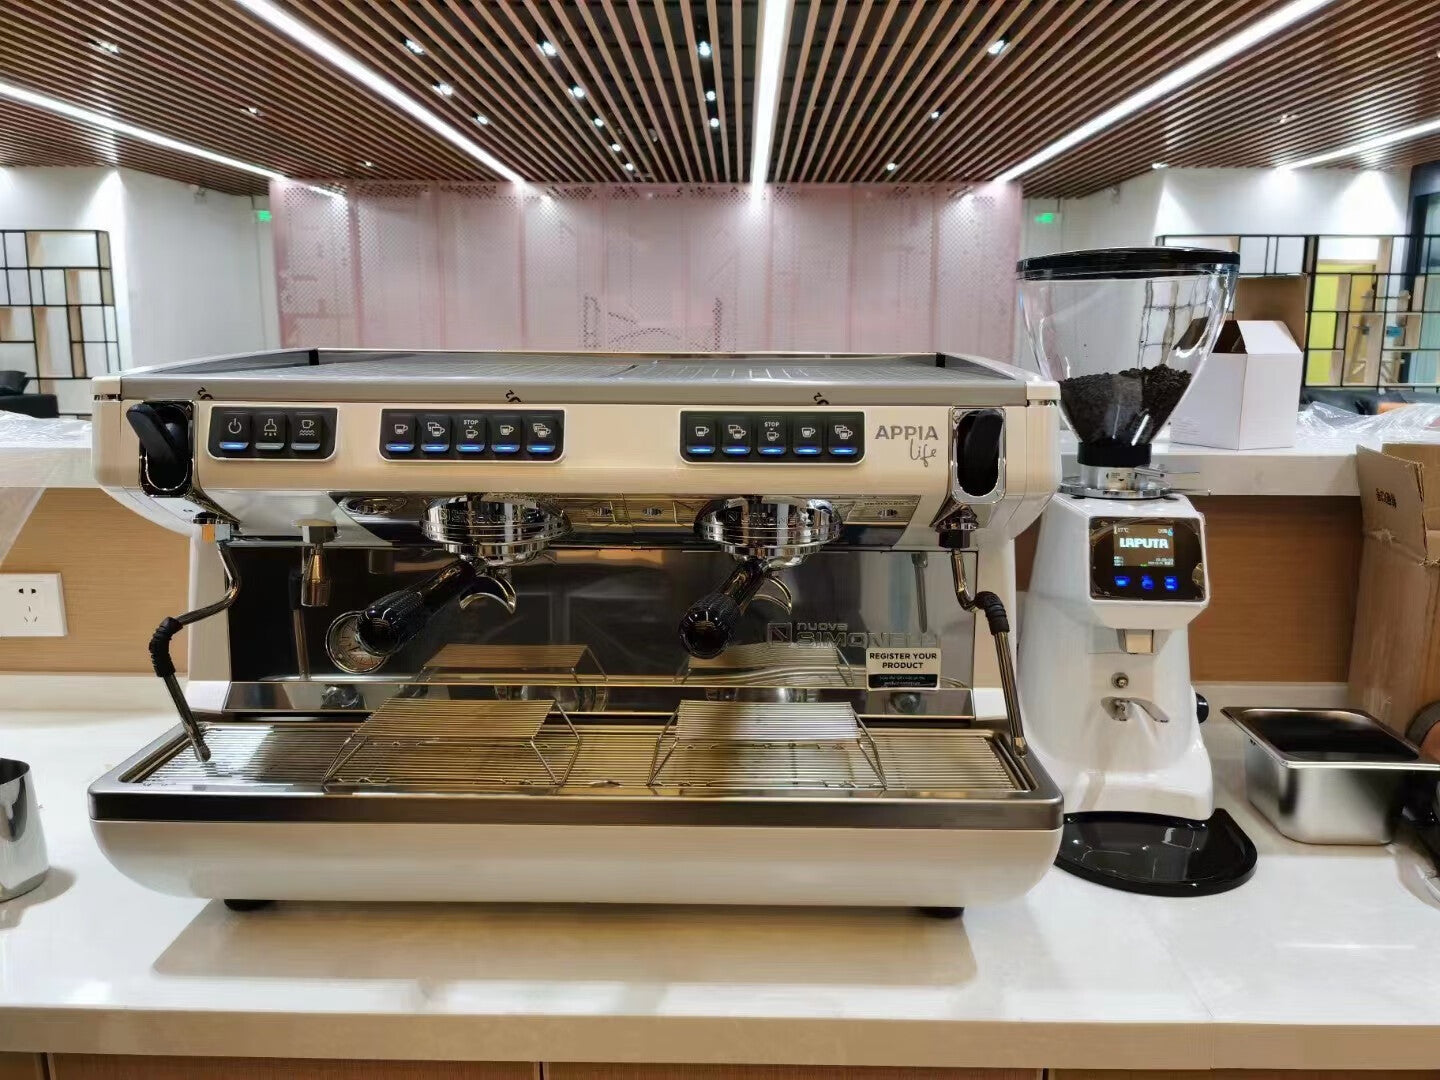 New Nuova Simonelli Commercial Coffee Machine（White） – Buzzy Coffee